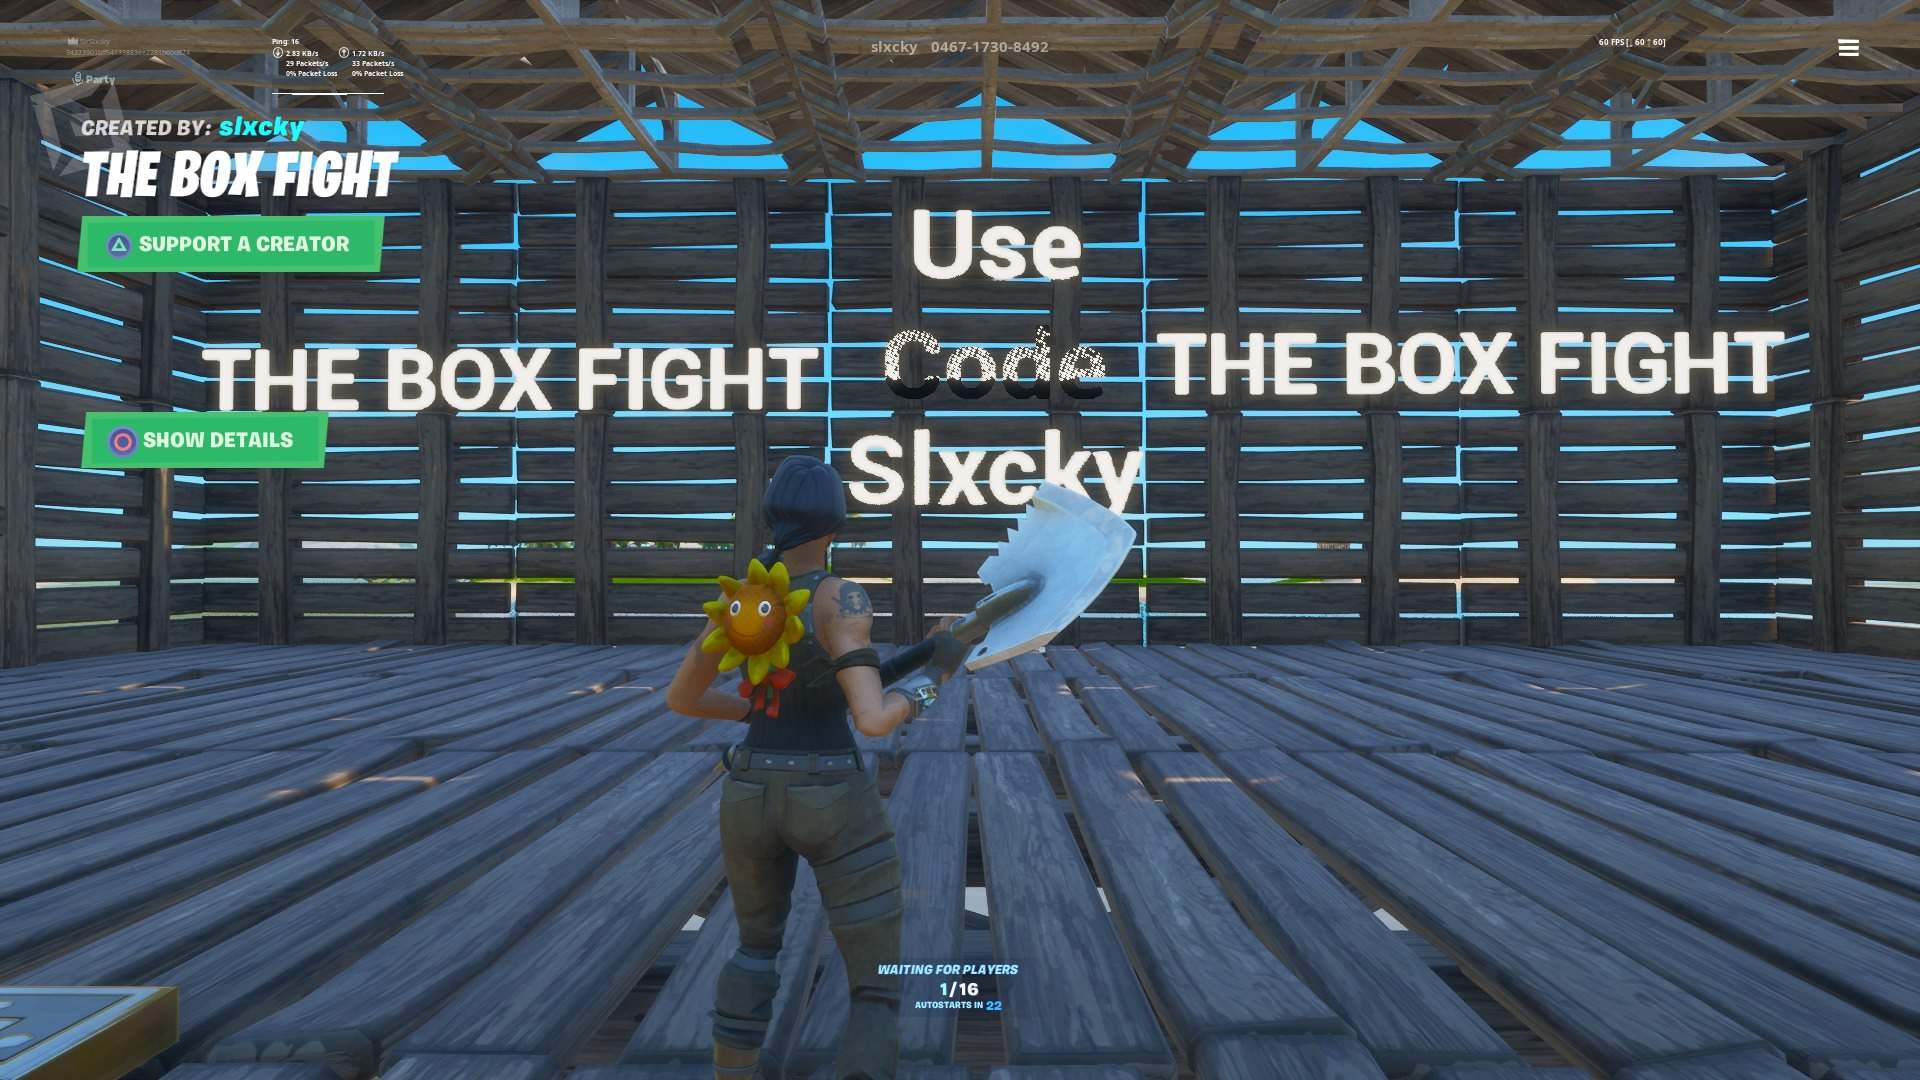 THE BOX FIGHT